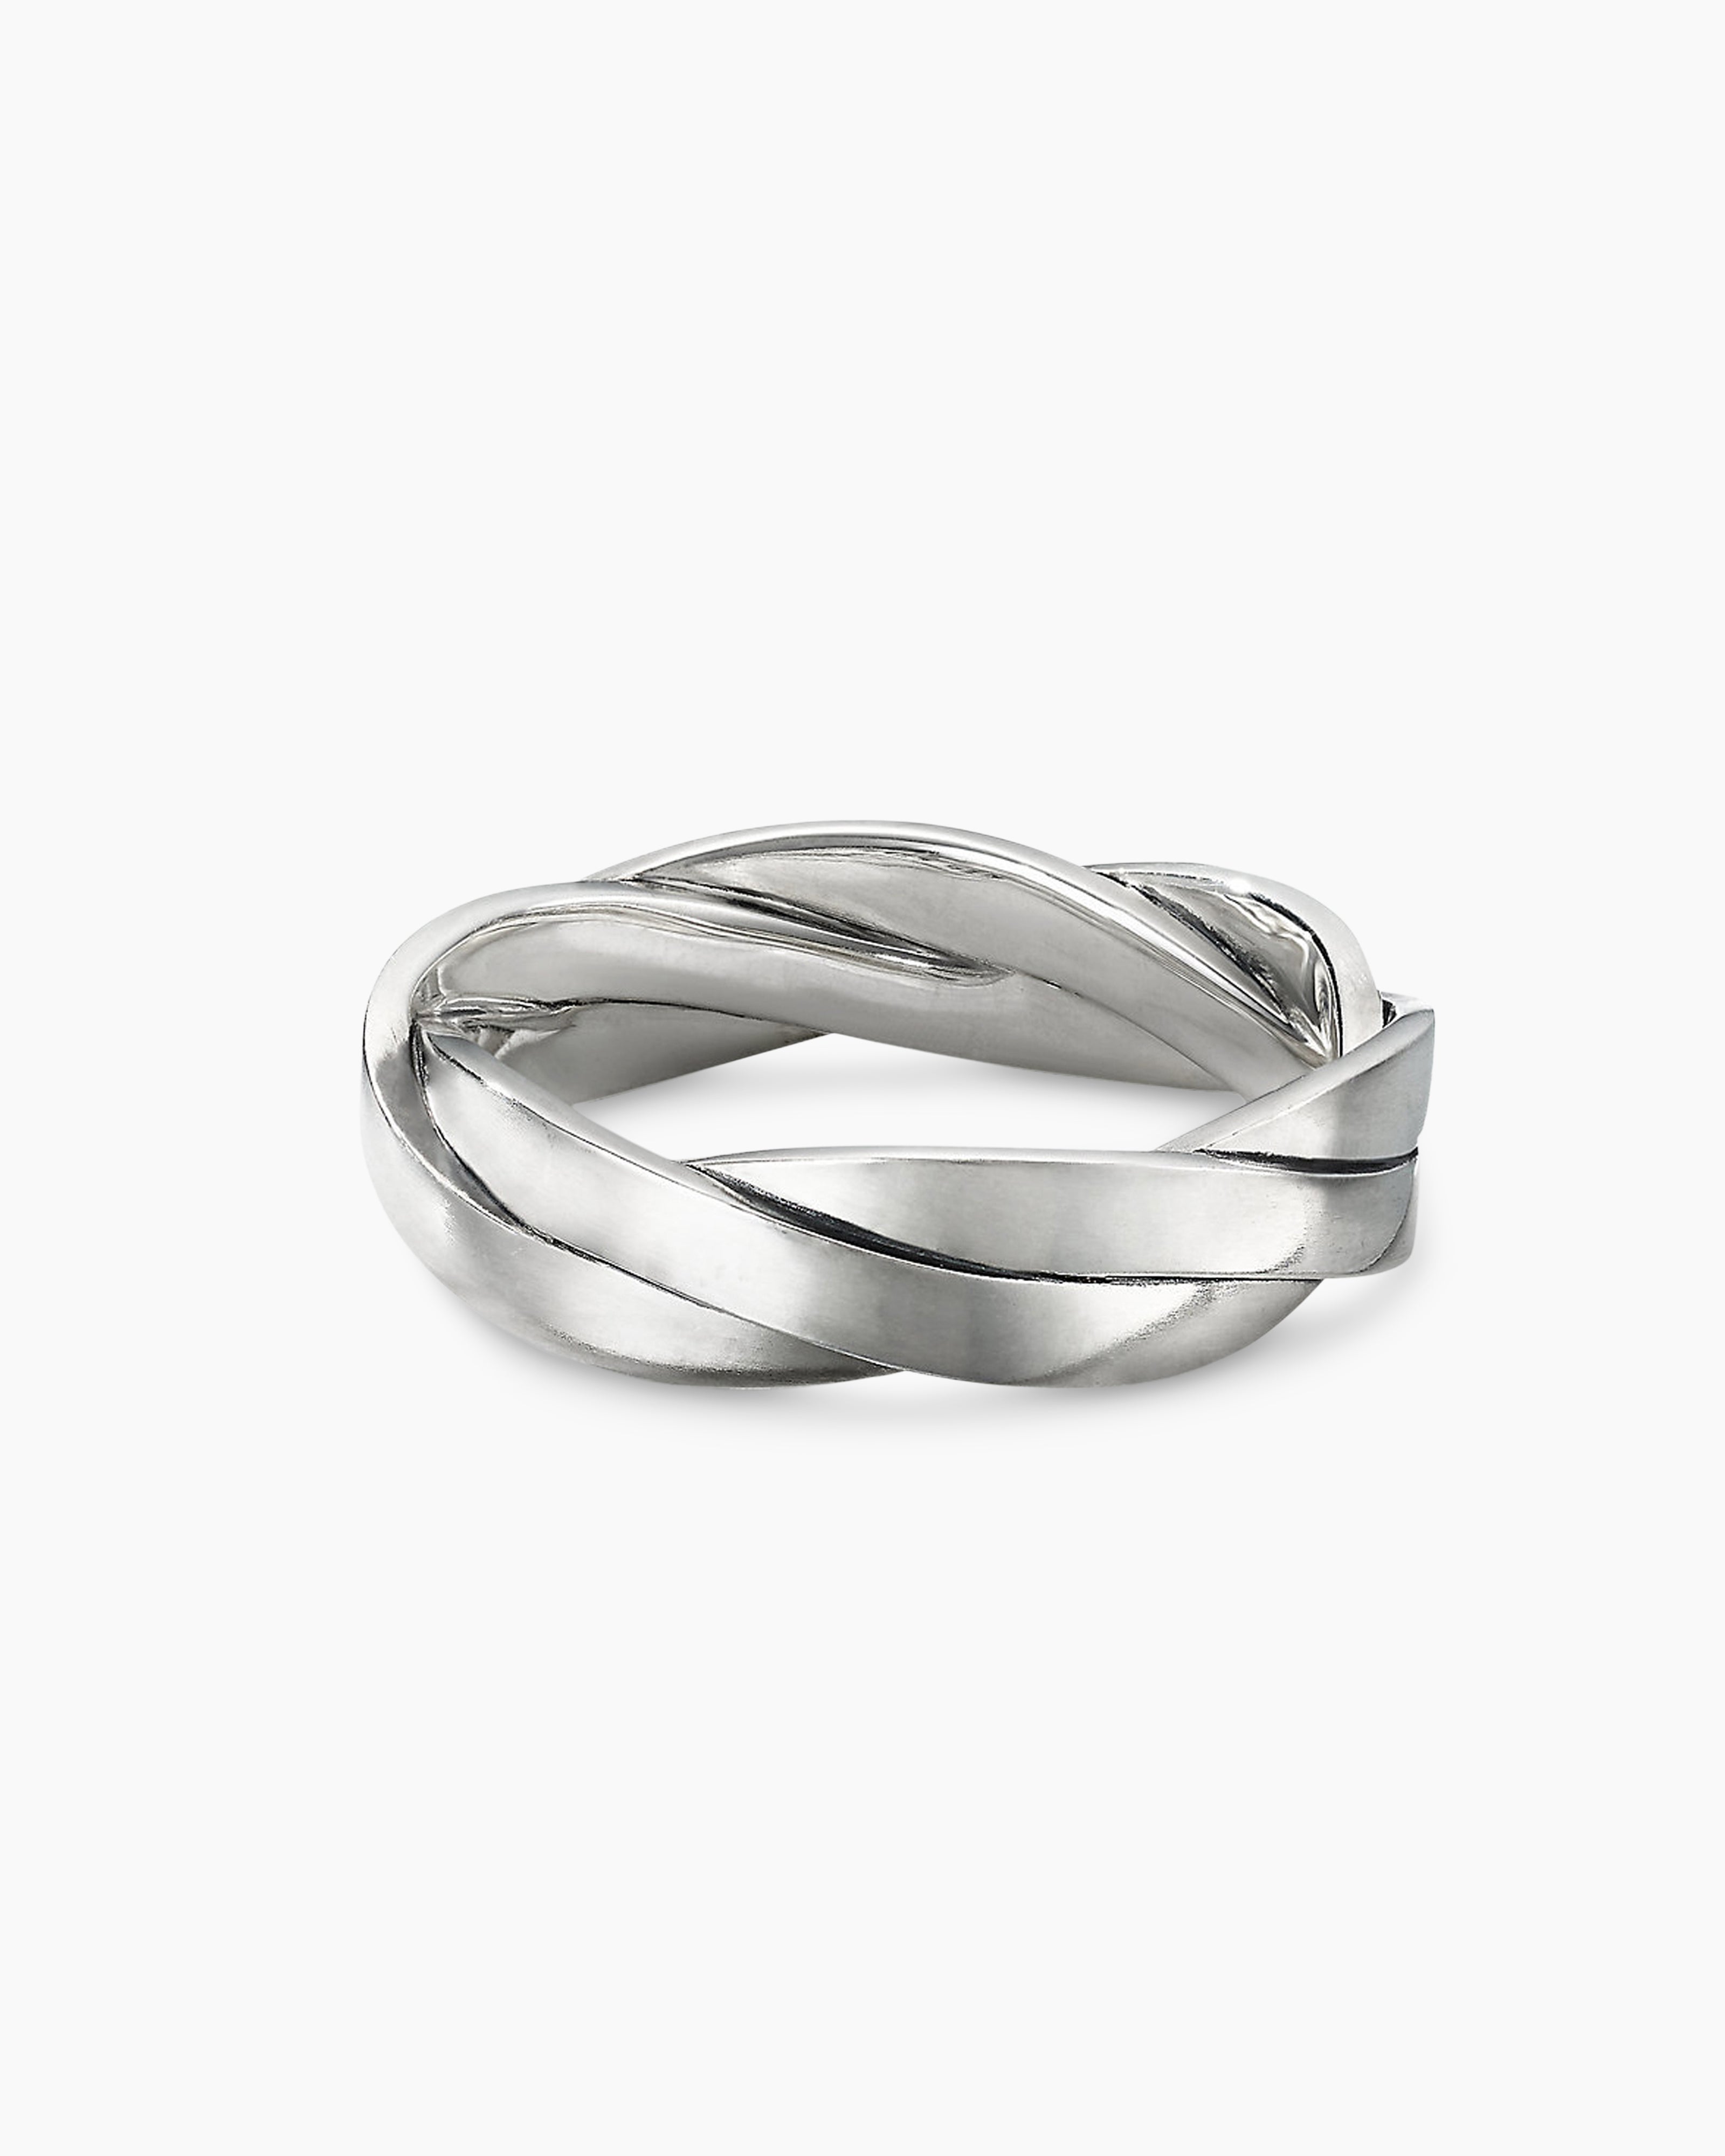 David Yurman Twisted Cable Band Ring, Size 10